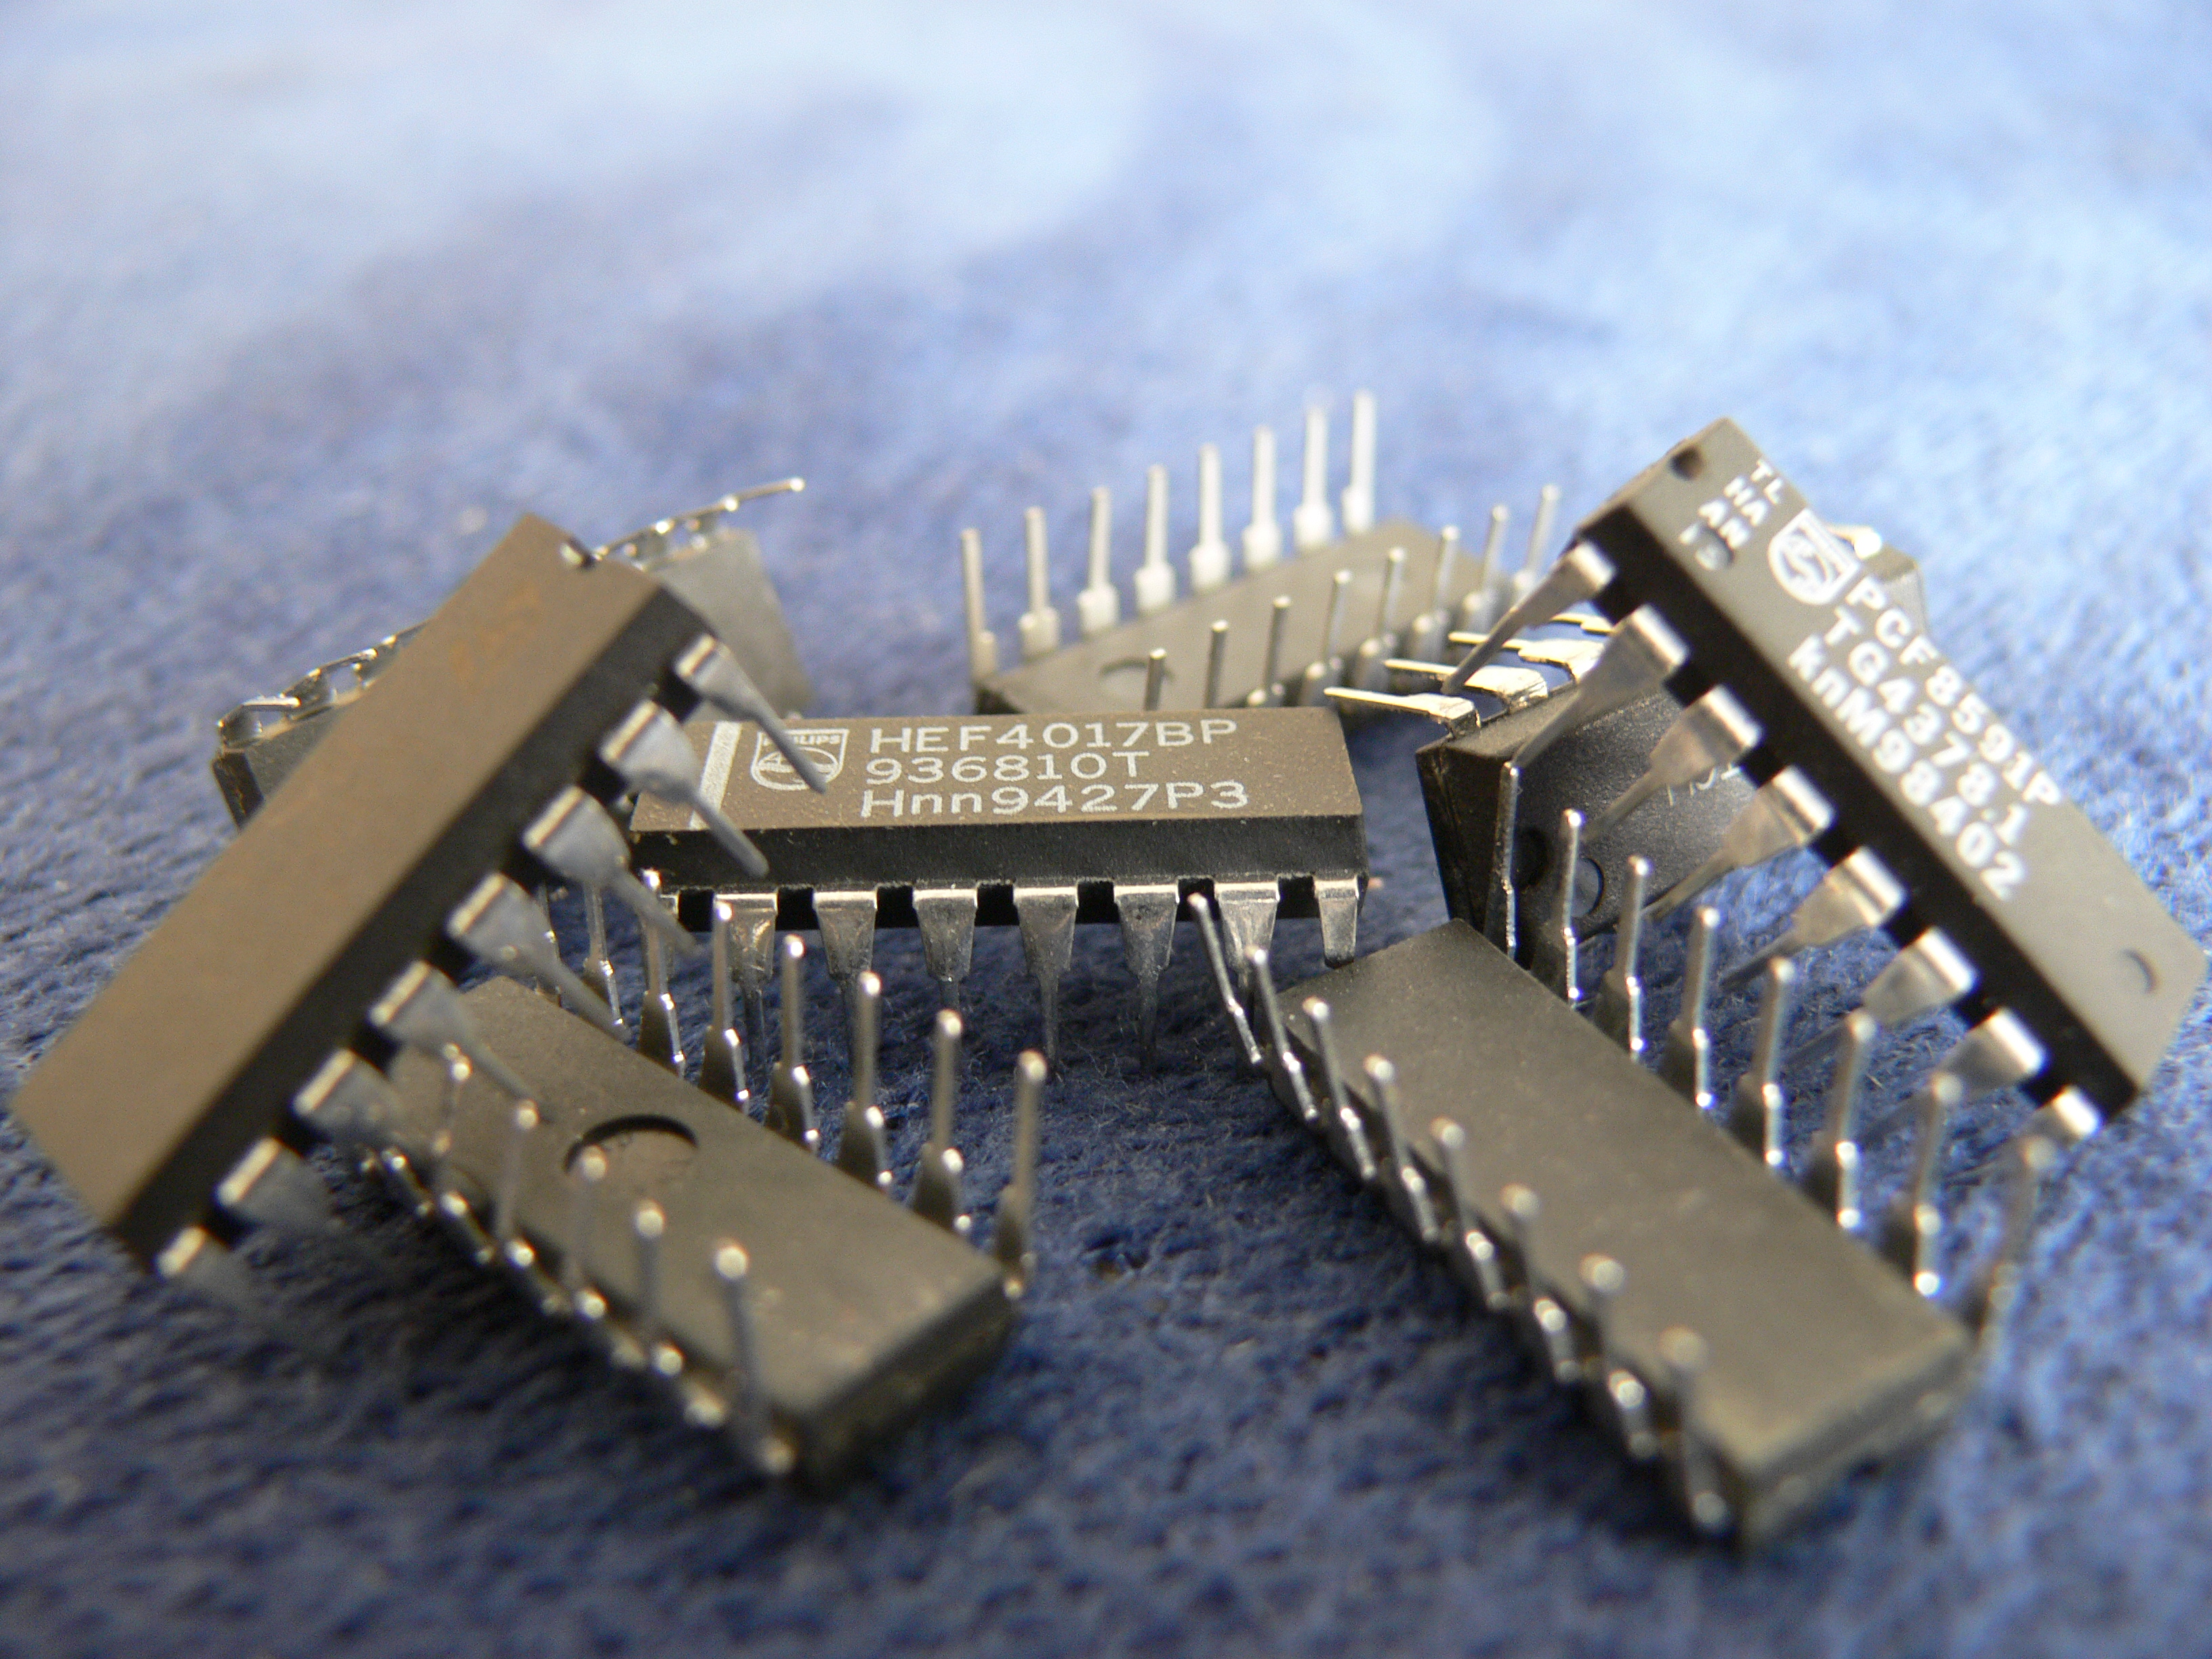 Free photo: Integrated circuits, Chips, Digital